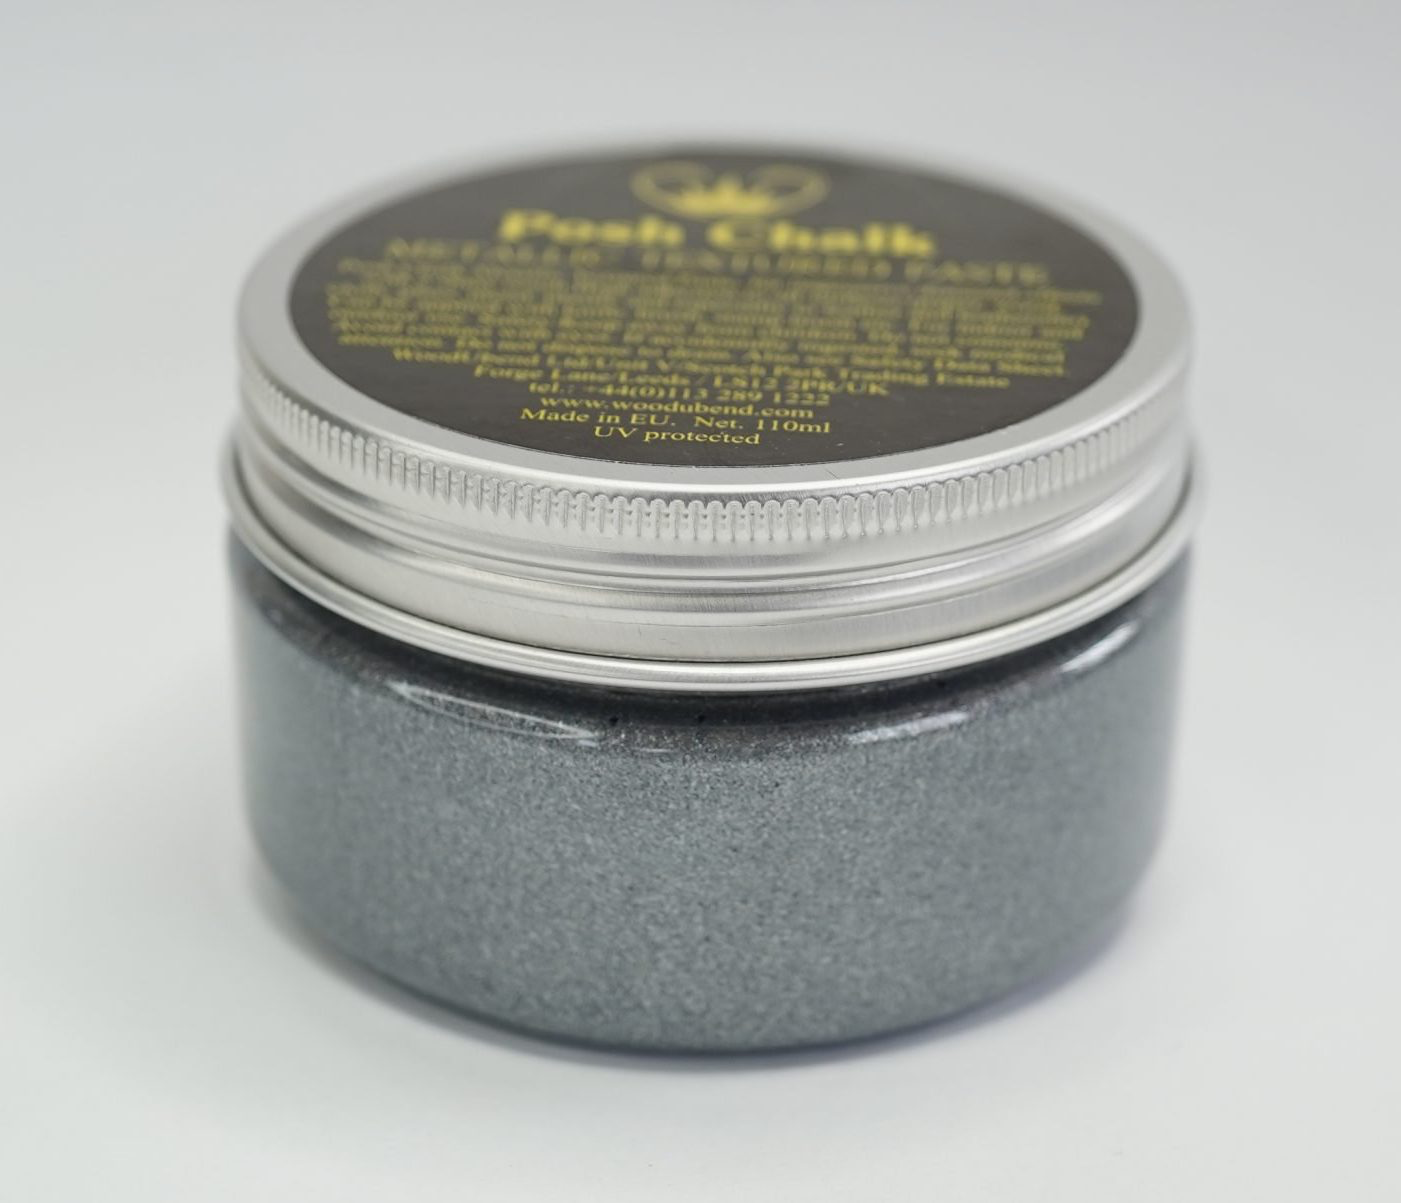 Posh Chalk Textured Paste - Black Graphite 110ml